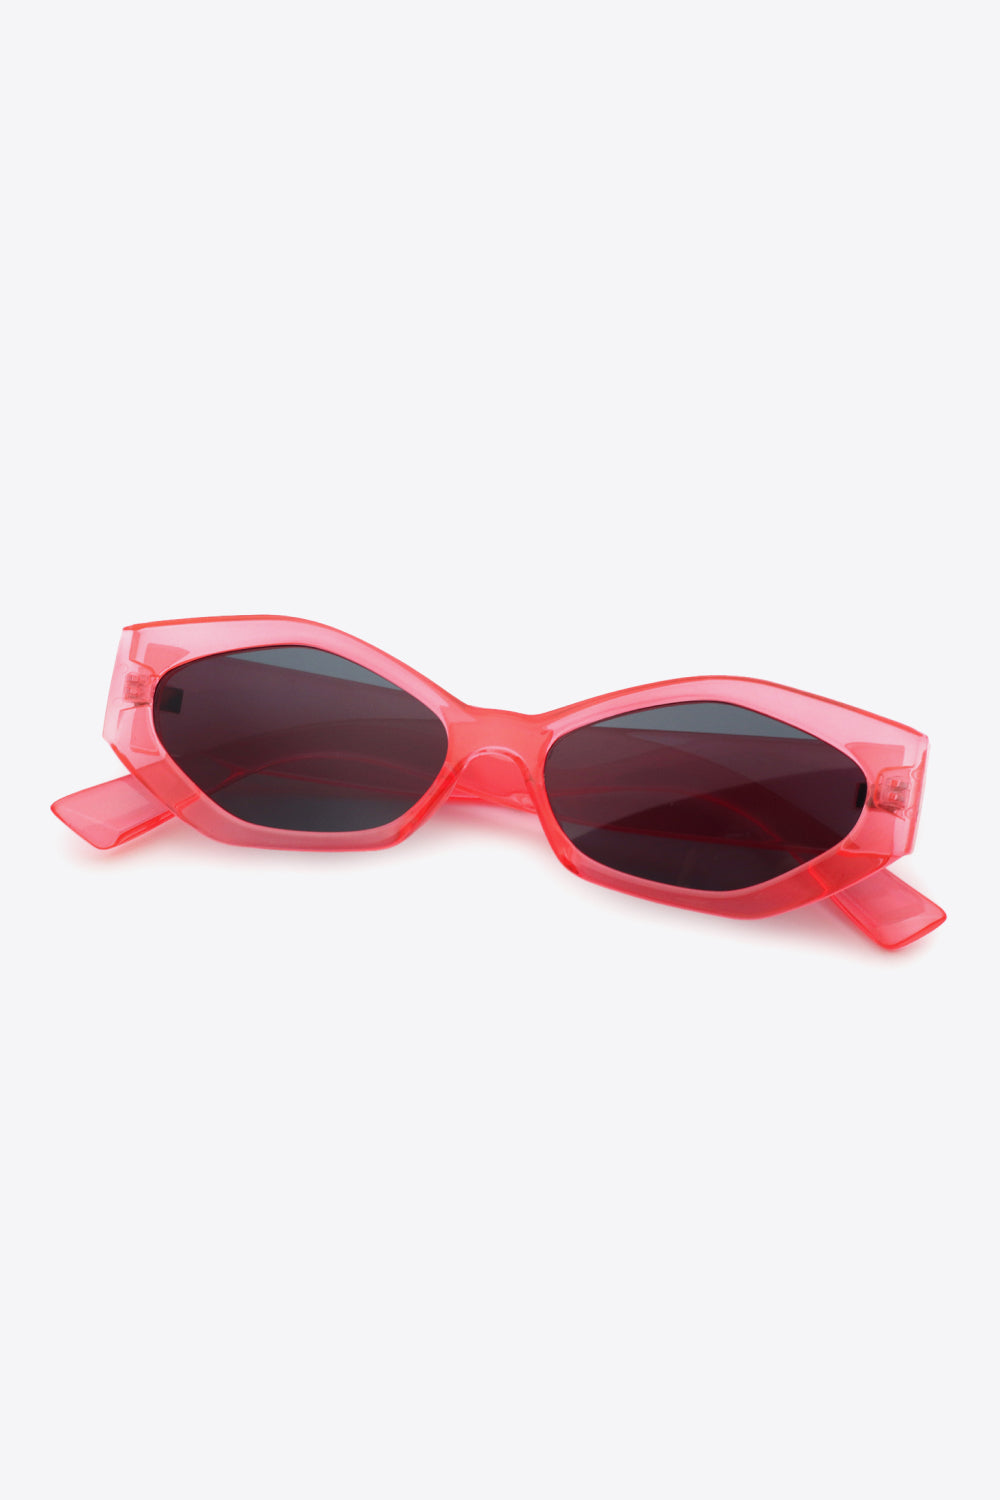 Polycarbonate Frame Wayfarer Sunglasses - AllIn Computer